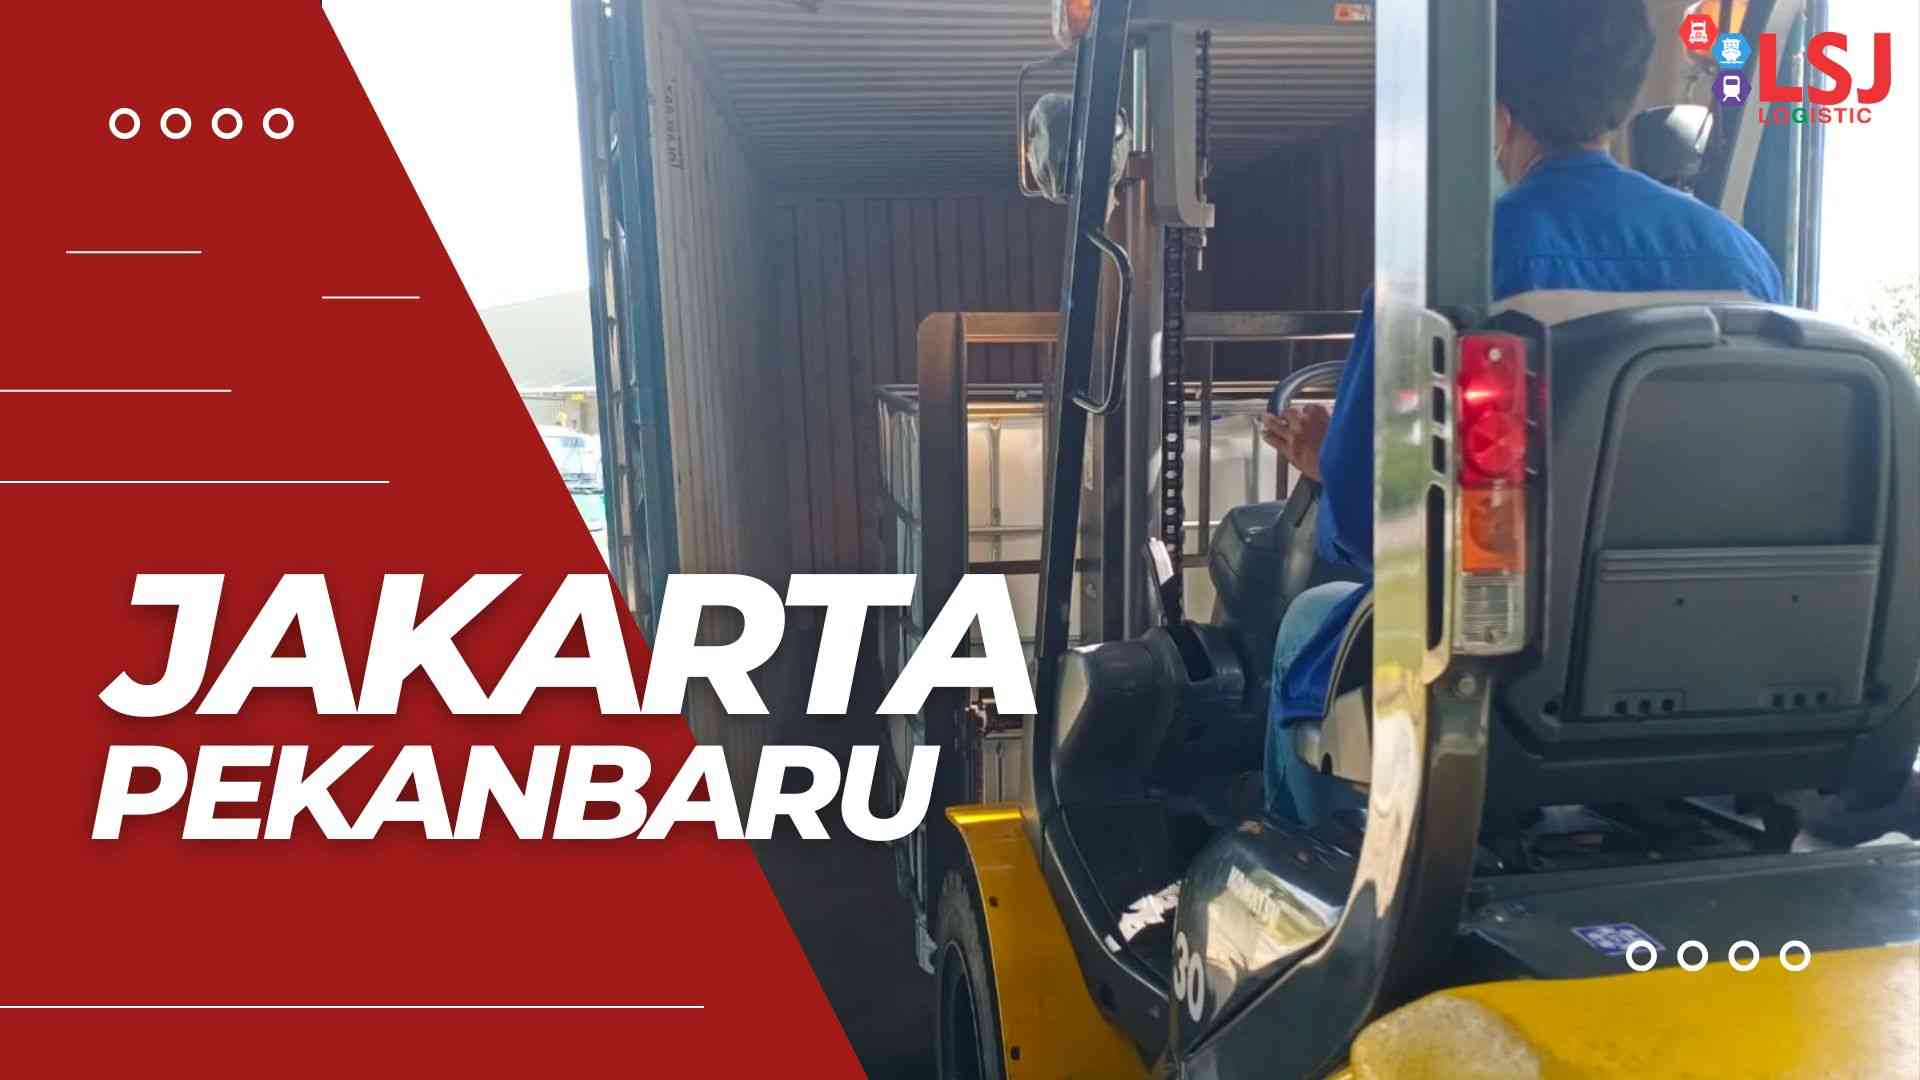 Ekspedisi Container Jakarta Pekanbaru